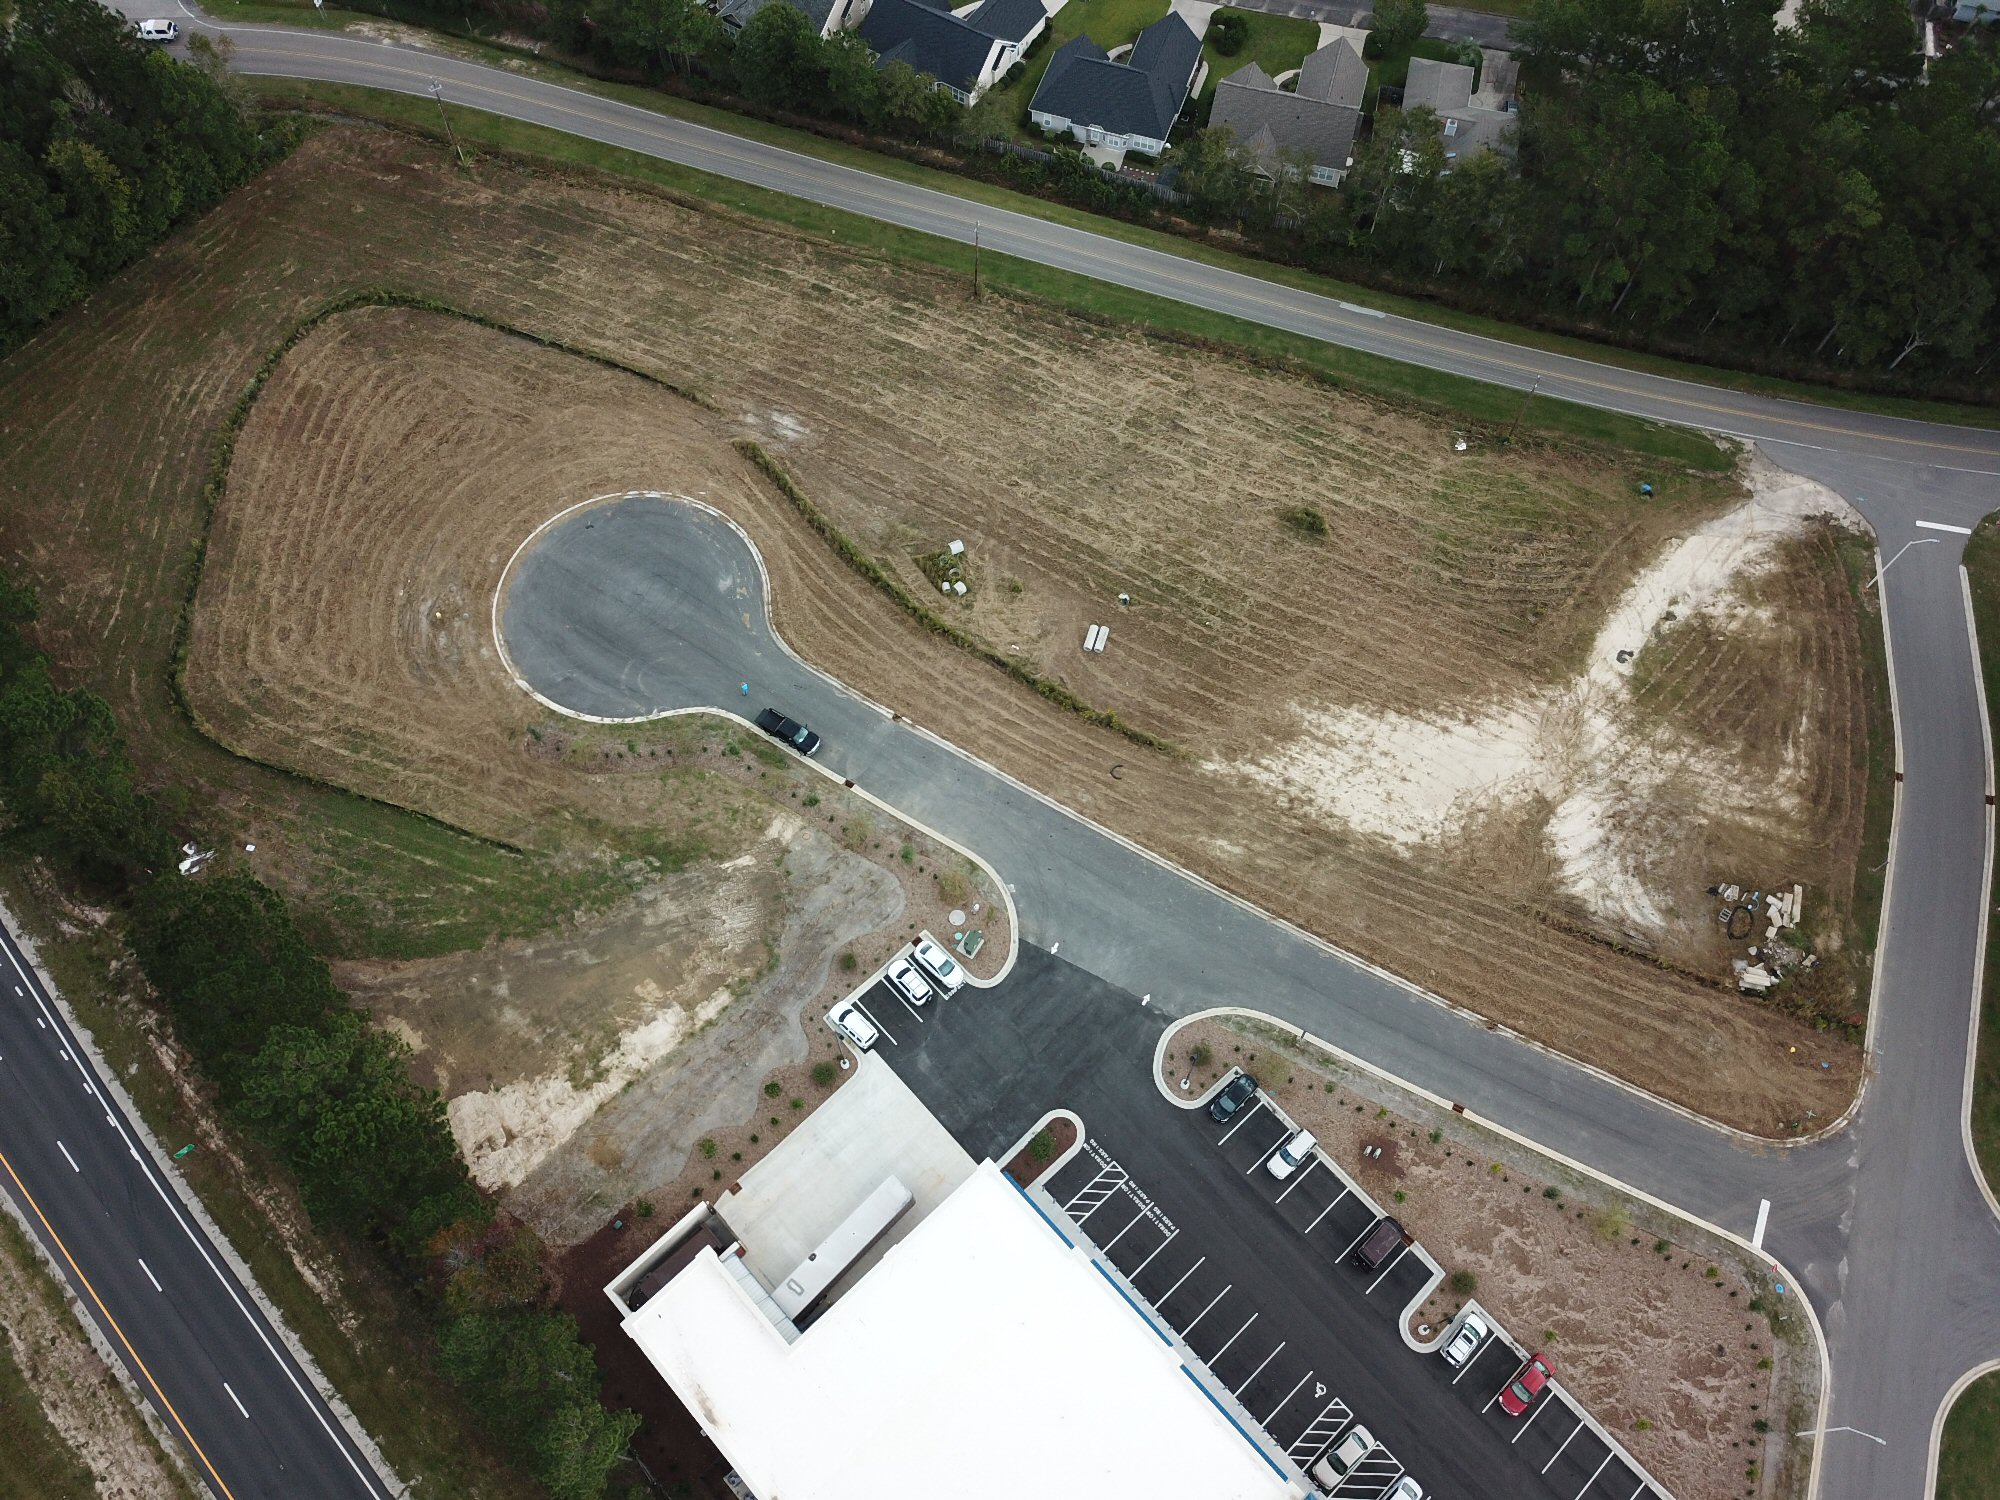 South Brunswick Medical Park Drone Image 2